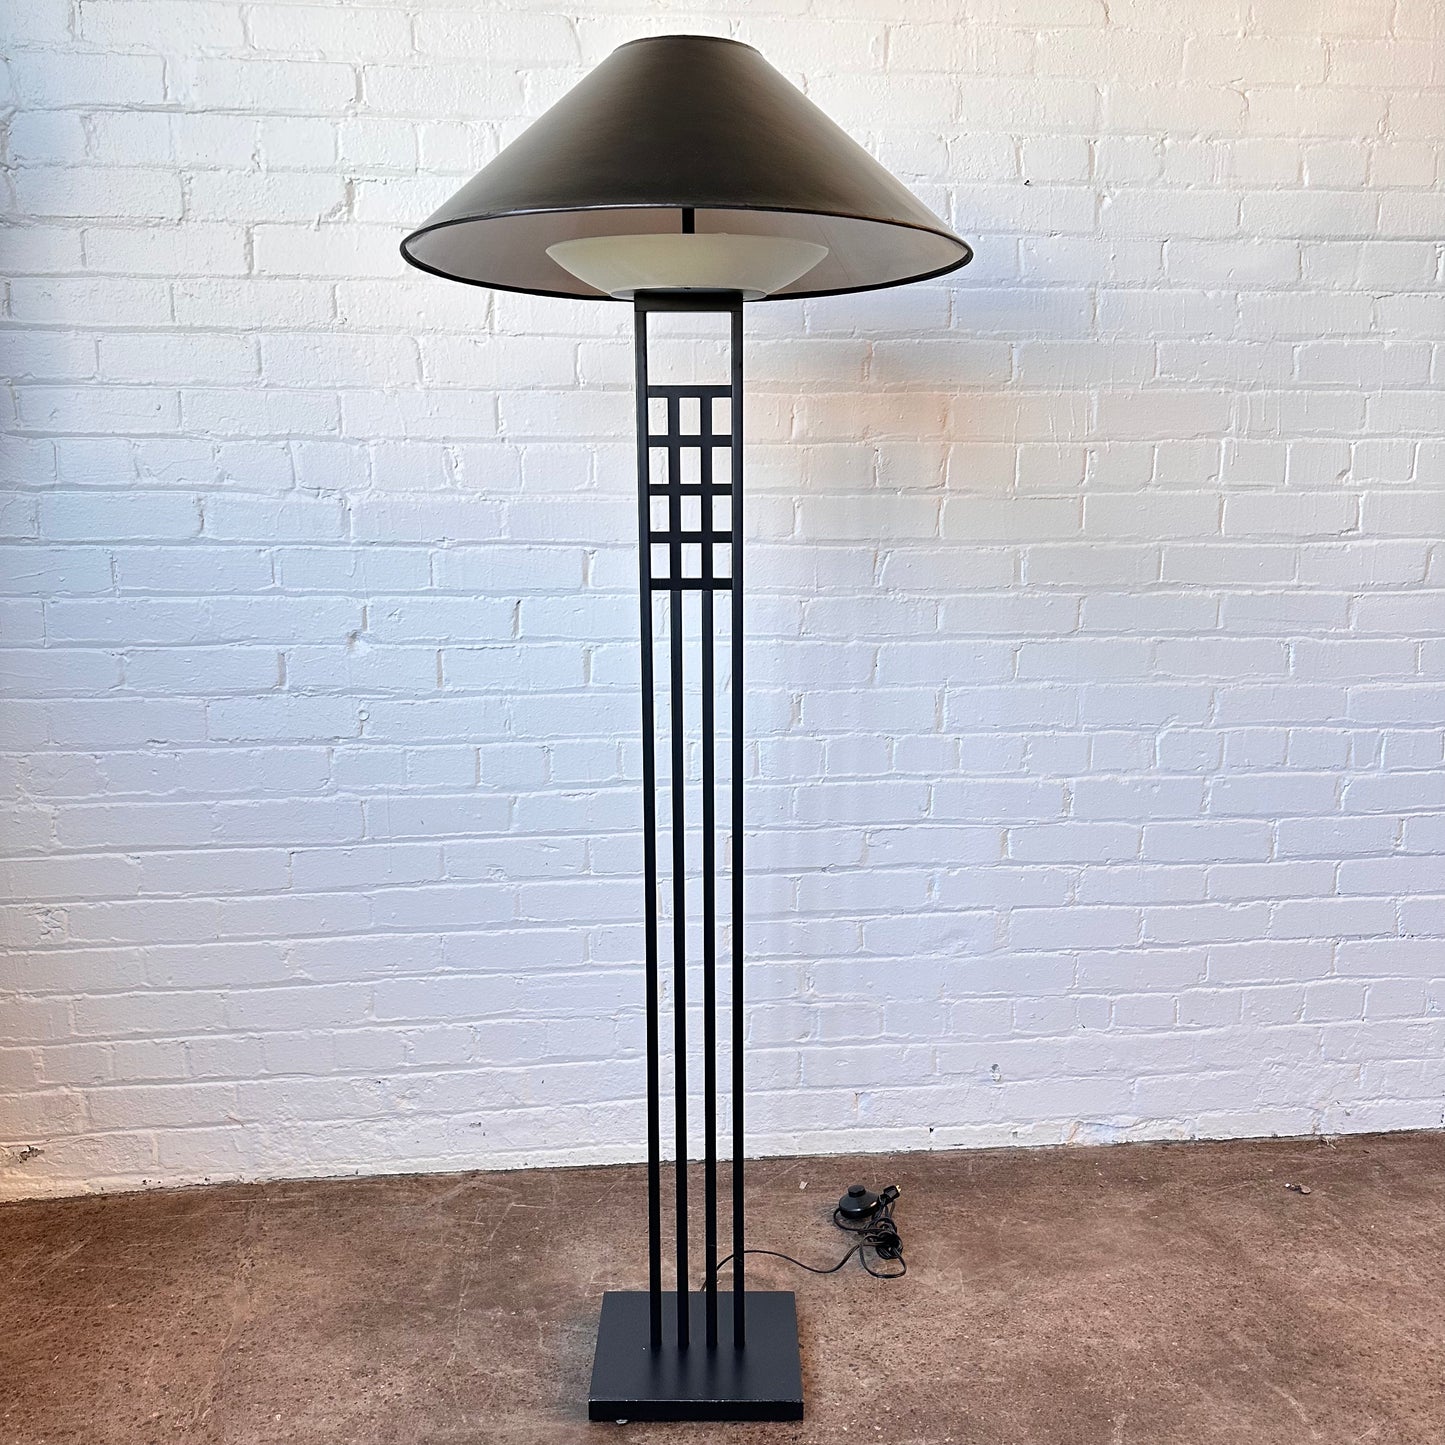 POST-MODERN FLOOR LAMP BY ROBERT SONNEMAN FOR GEORGE KOVACS